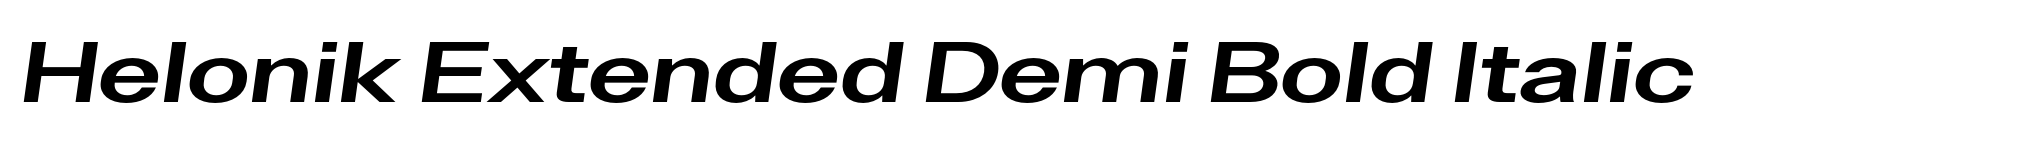 Helonik Extended Demi Bold Italic image